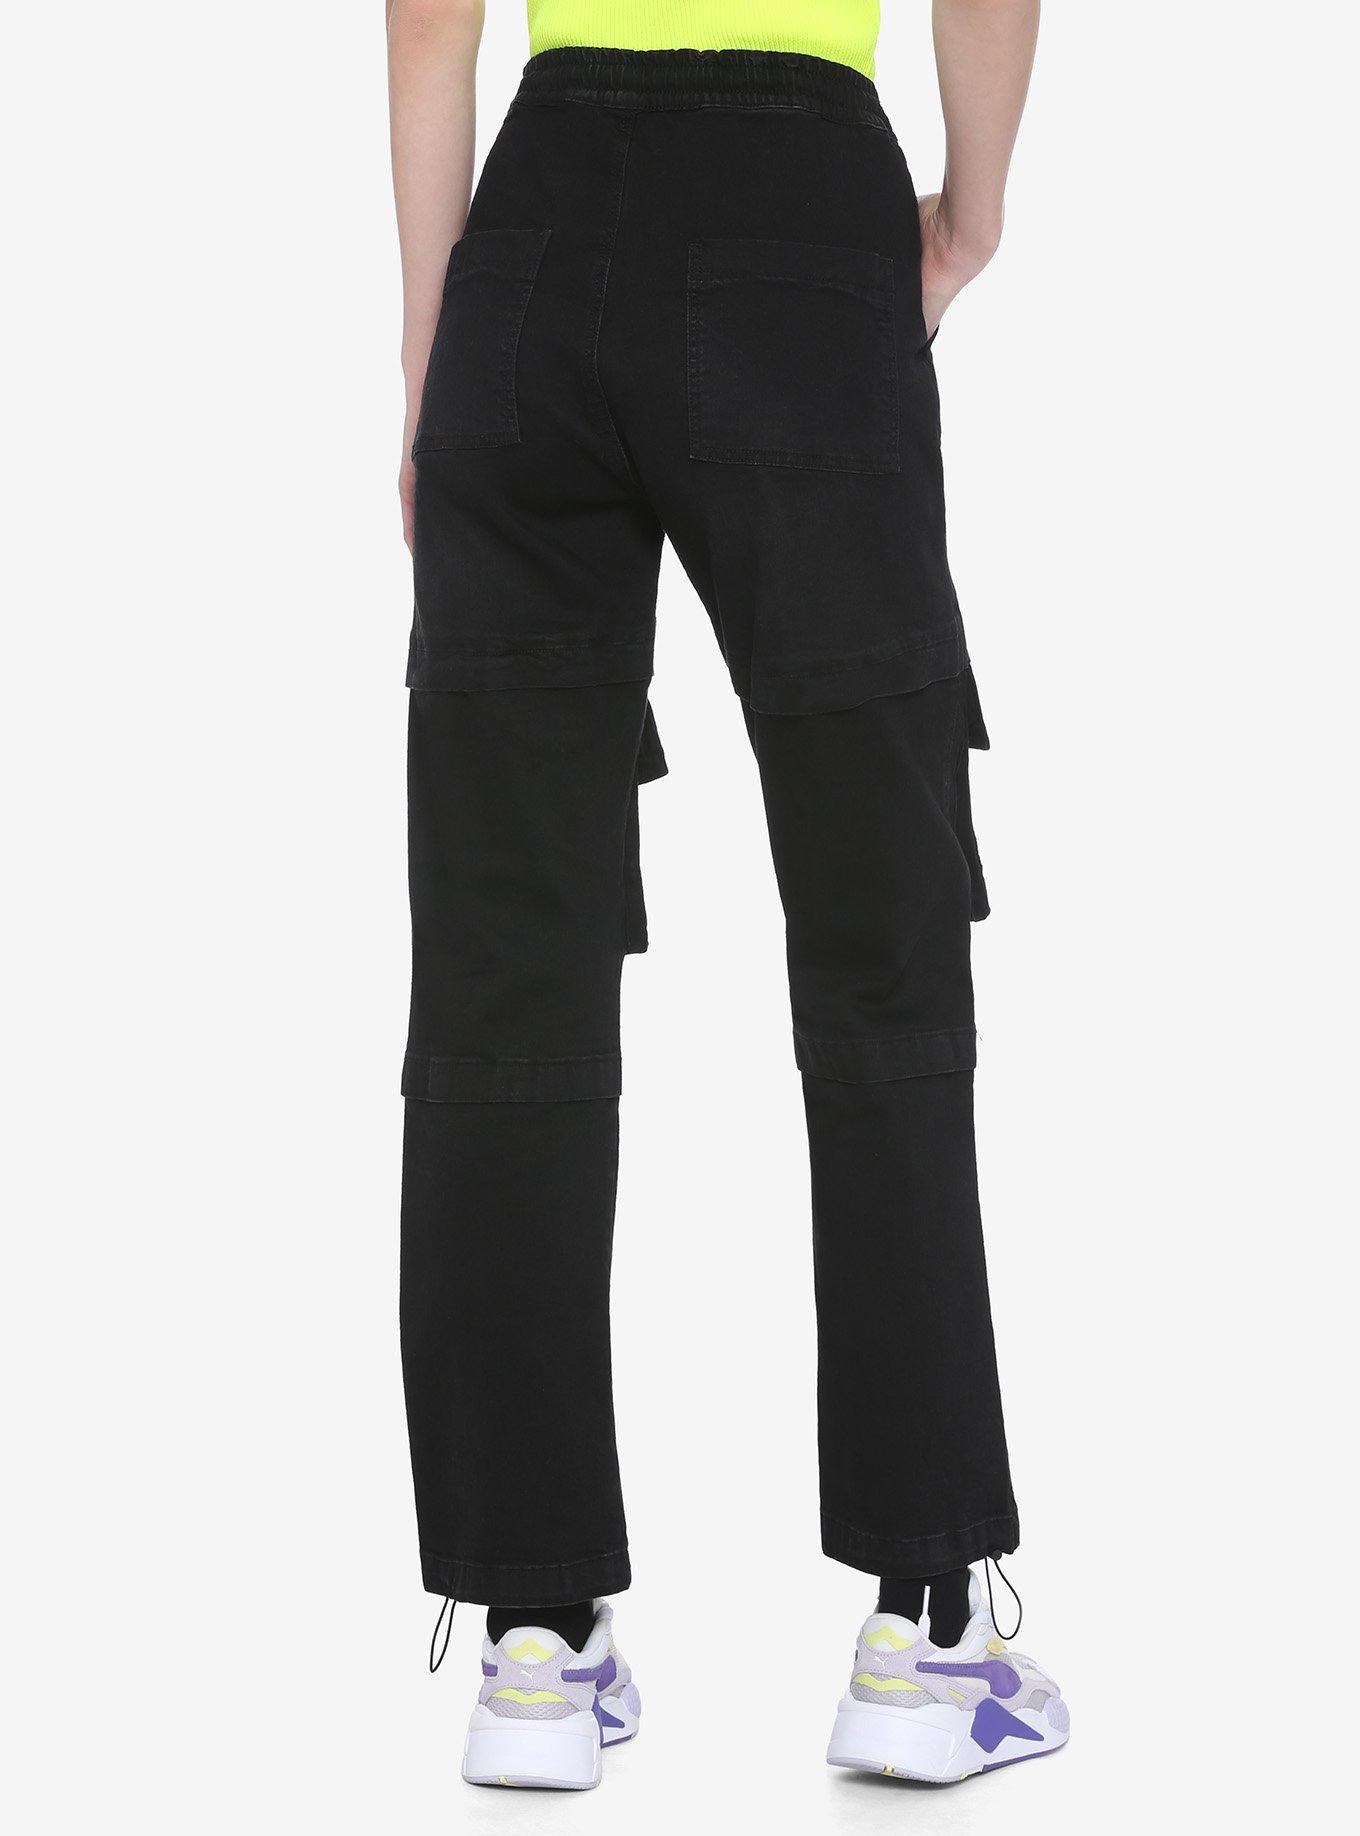 Black Zipper Pocket Jogger Pants, BLACK, alternate